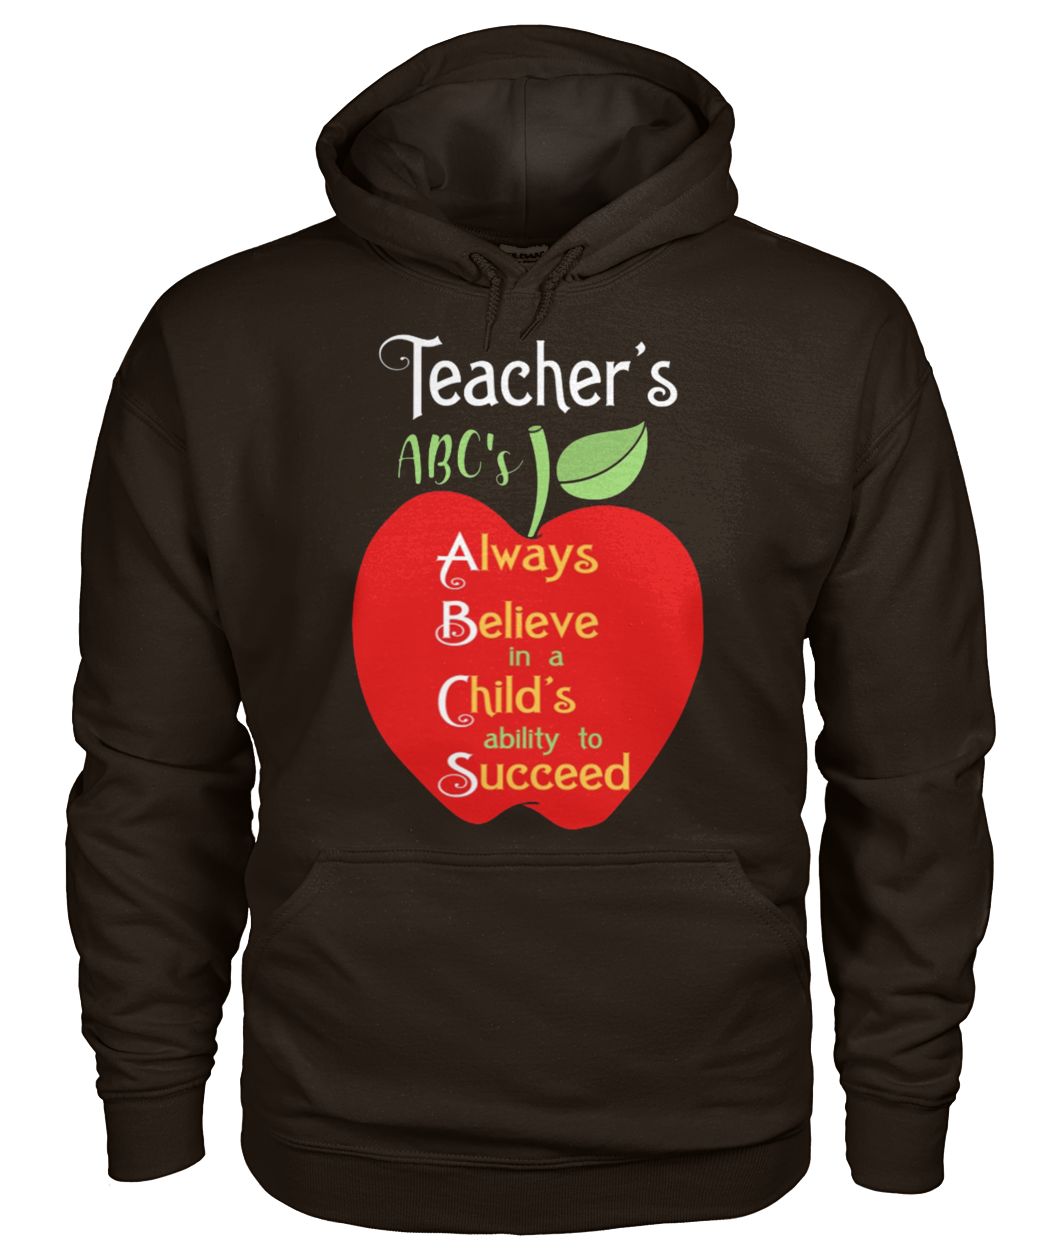 Apple teacher's abc's always believe in a child's ability to succeed gildan hoodie